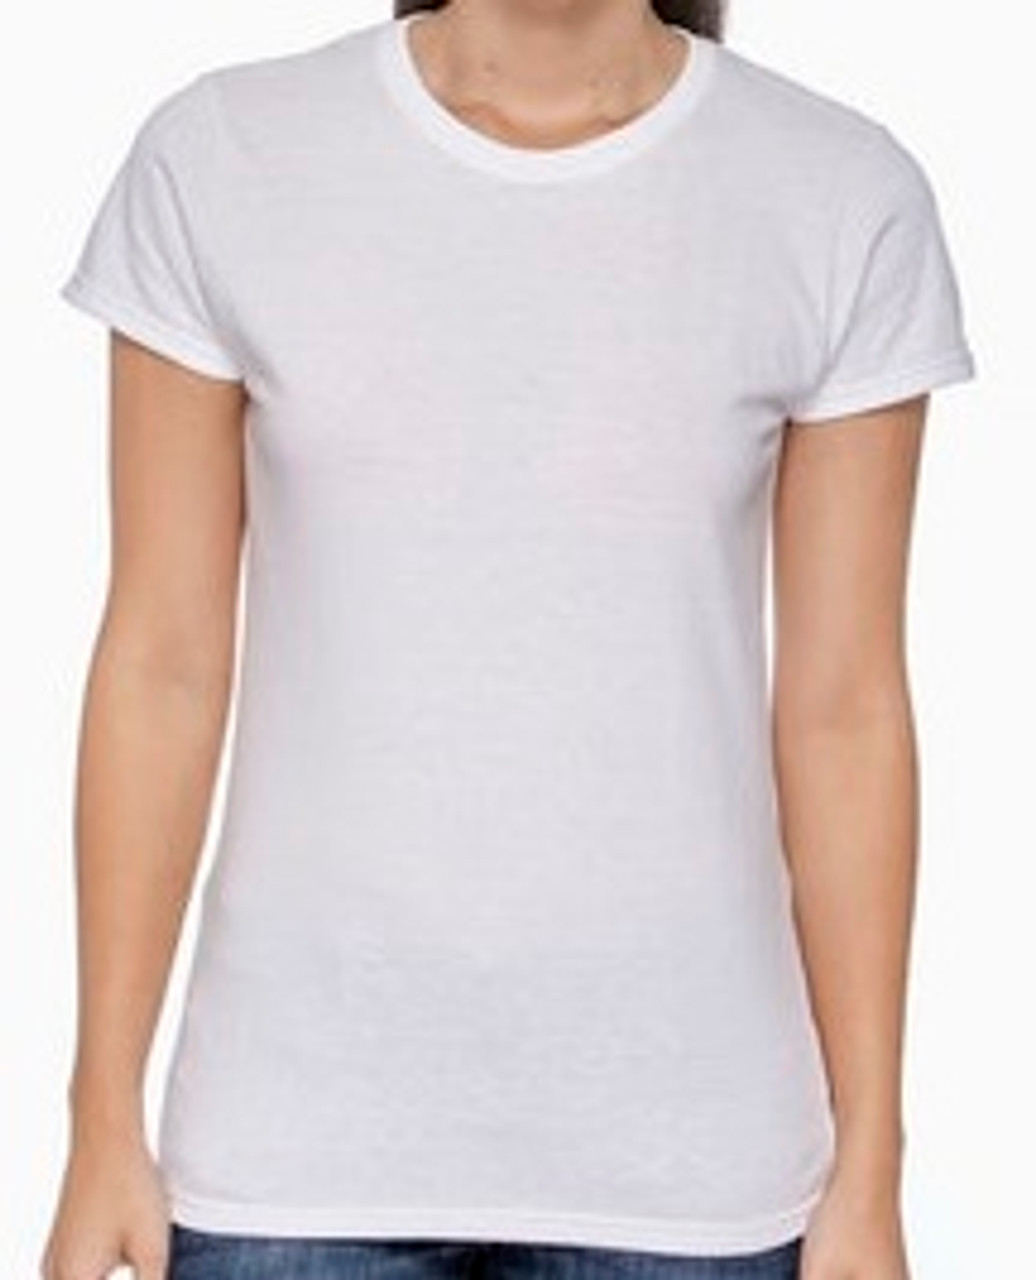 XL - Ladies - White - Gildan - Custom T-shirt